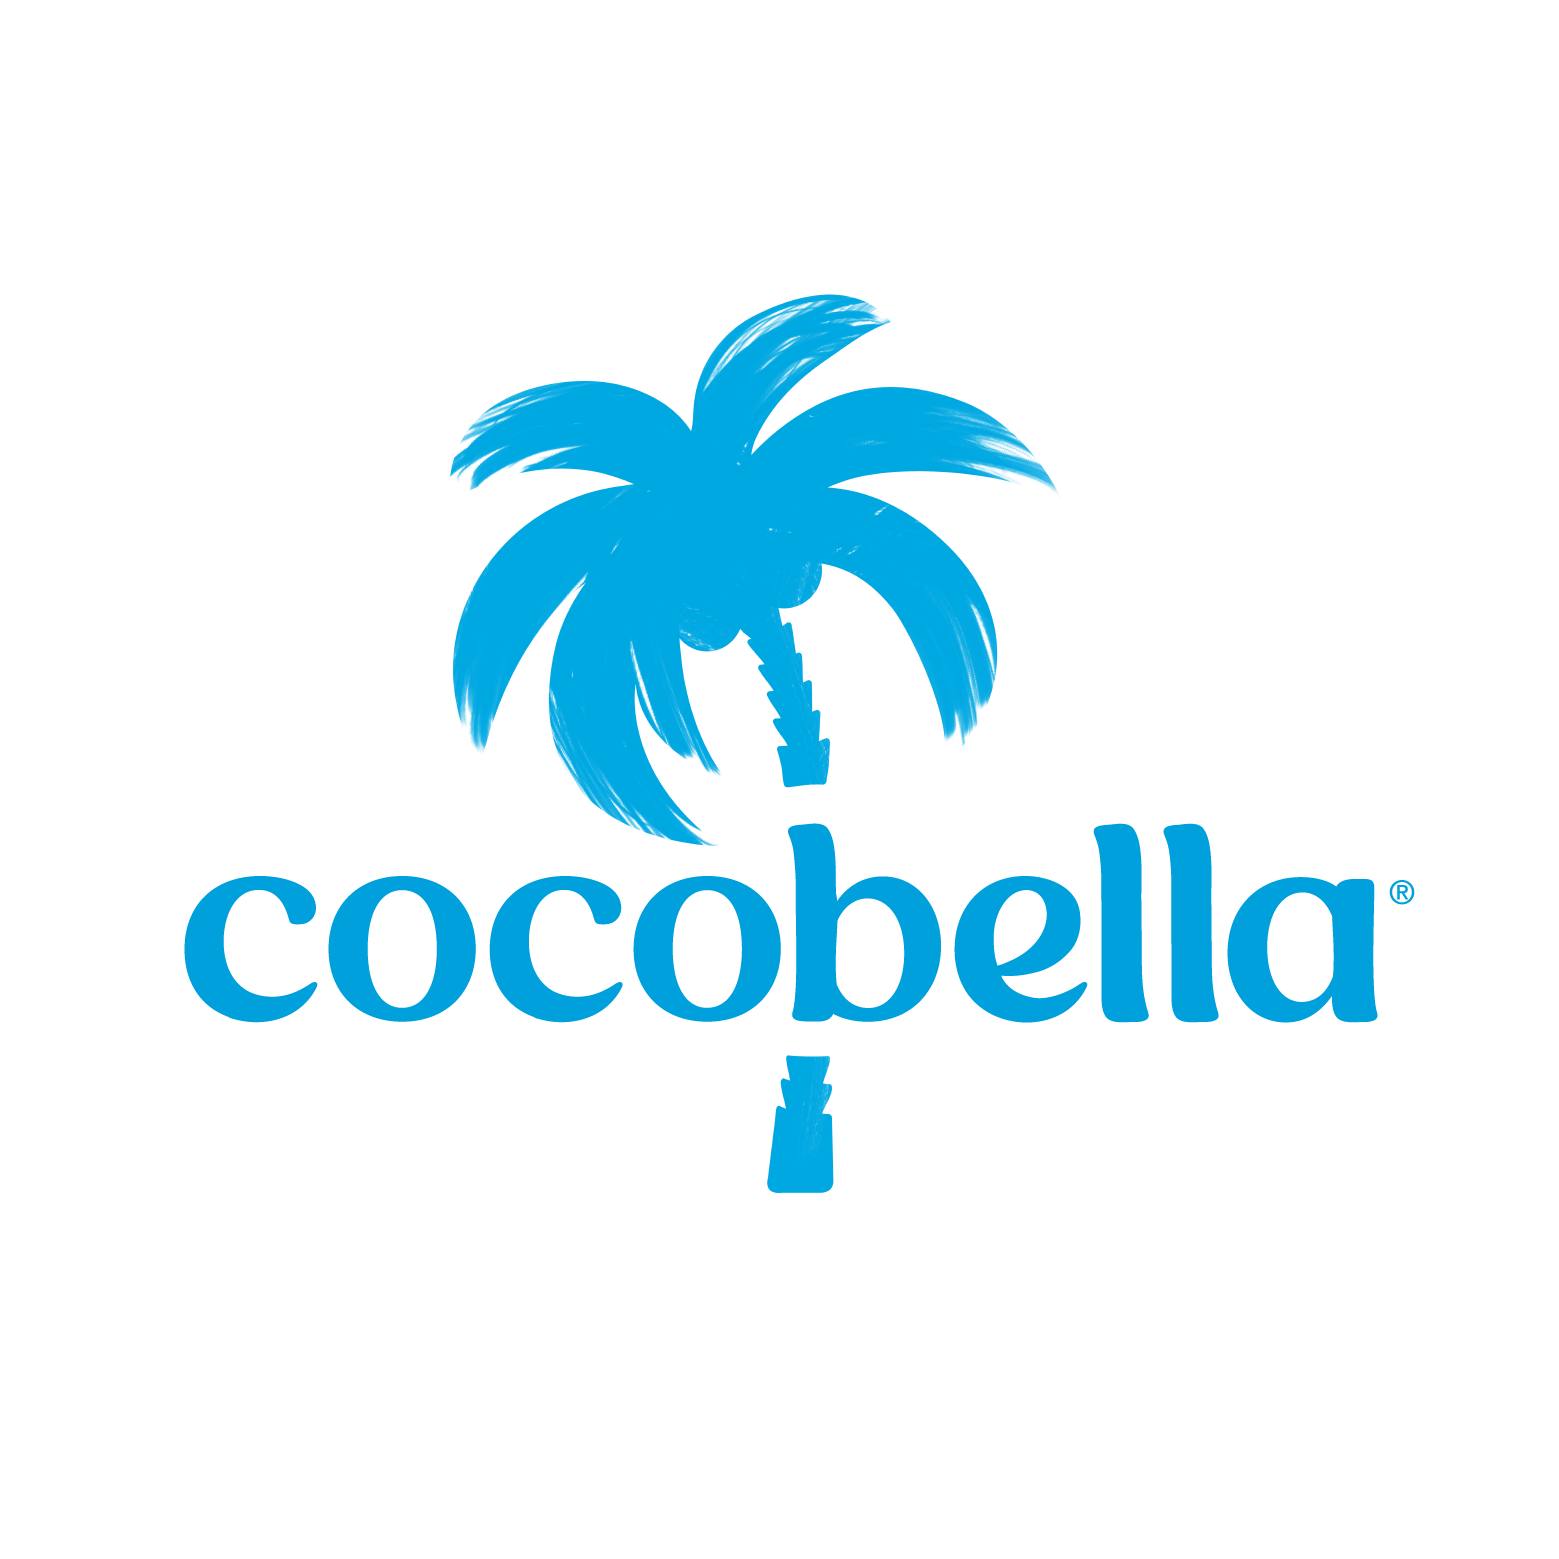 Cococbella